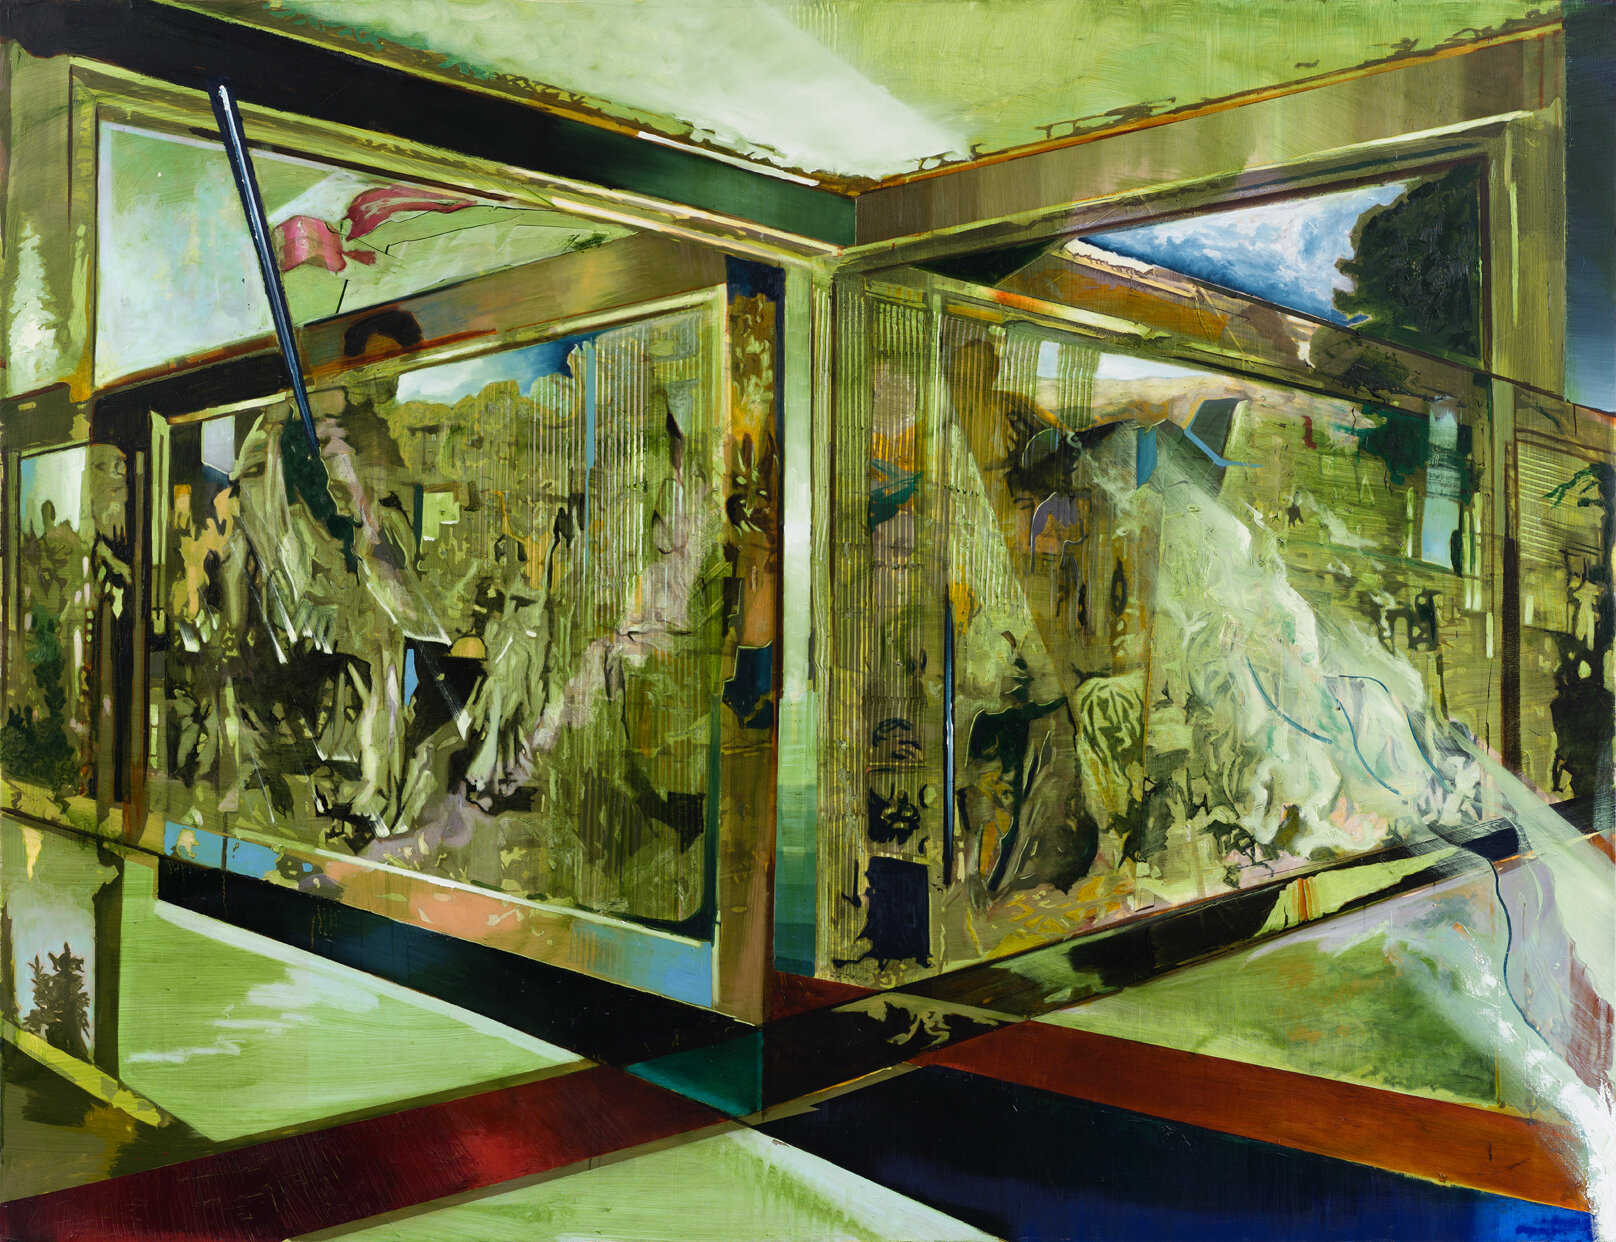 Transfiguration (2014), oil on canvas, 200x260 cm 